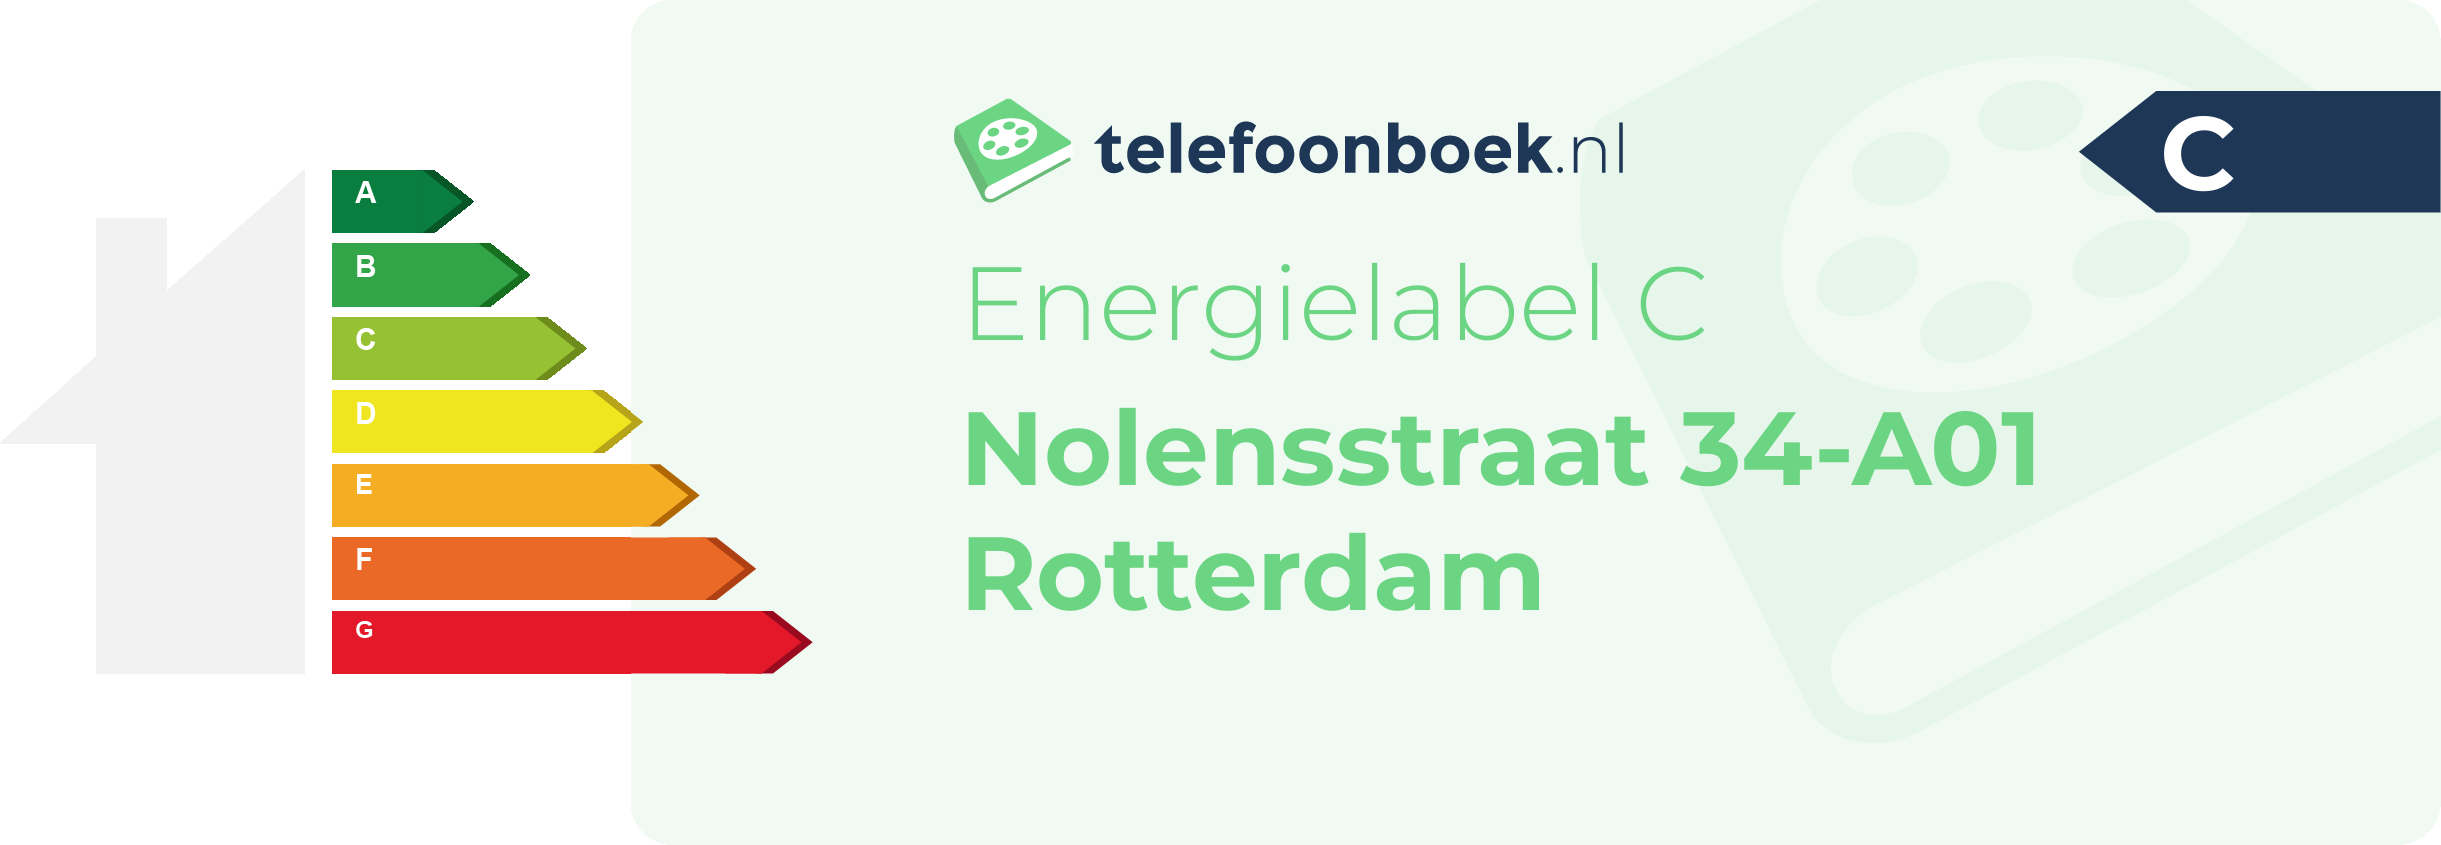 Energielabel Nolensstraat 34-A01 Rotterdam